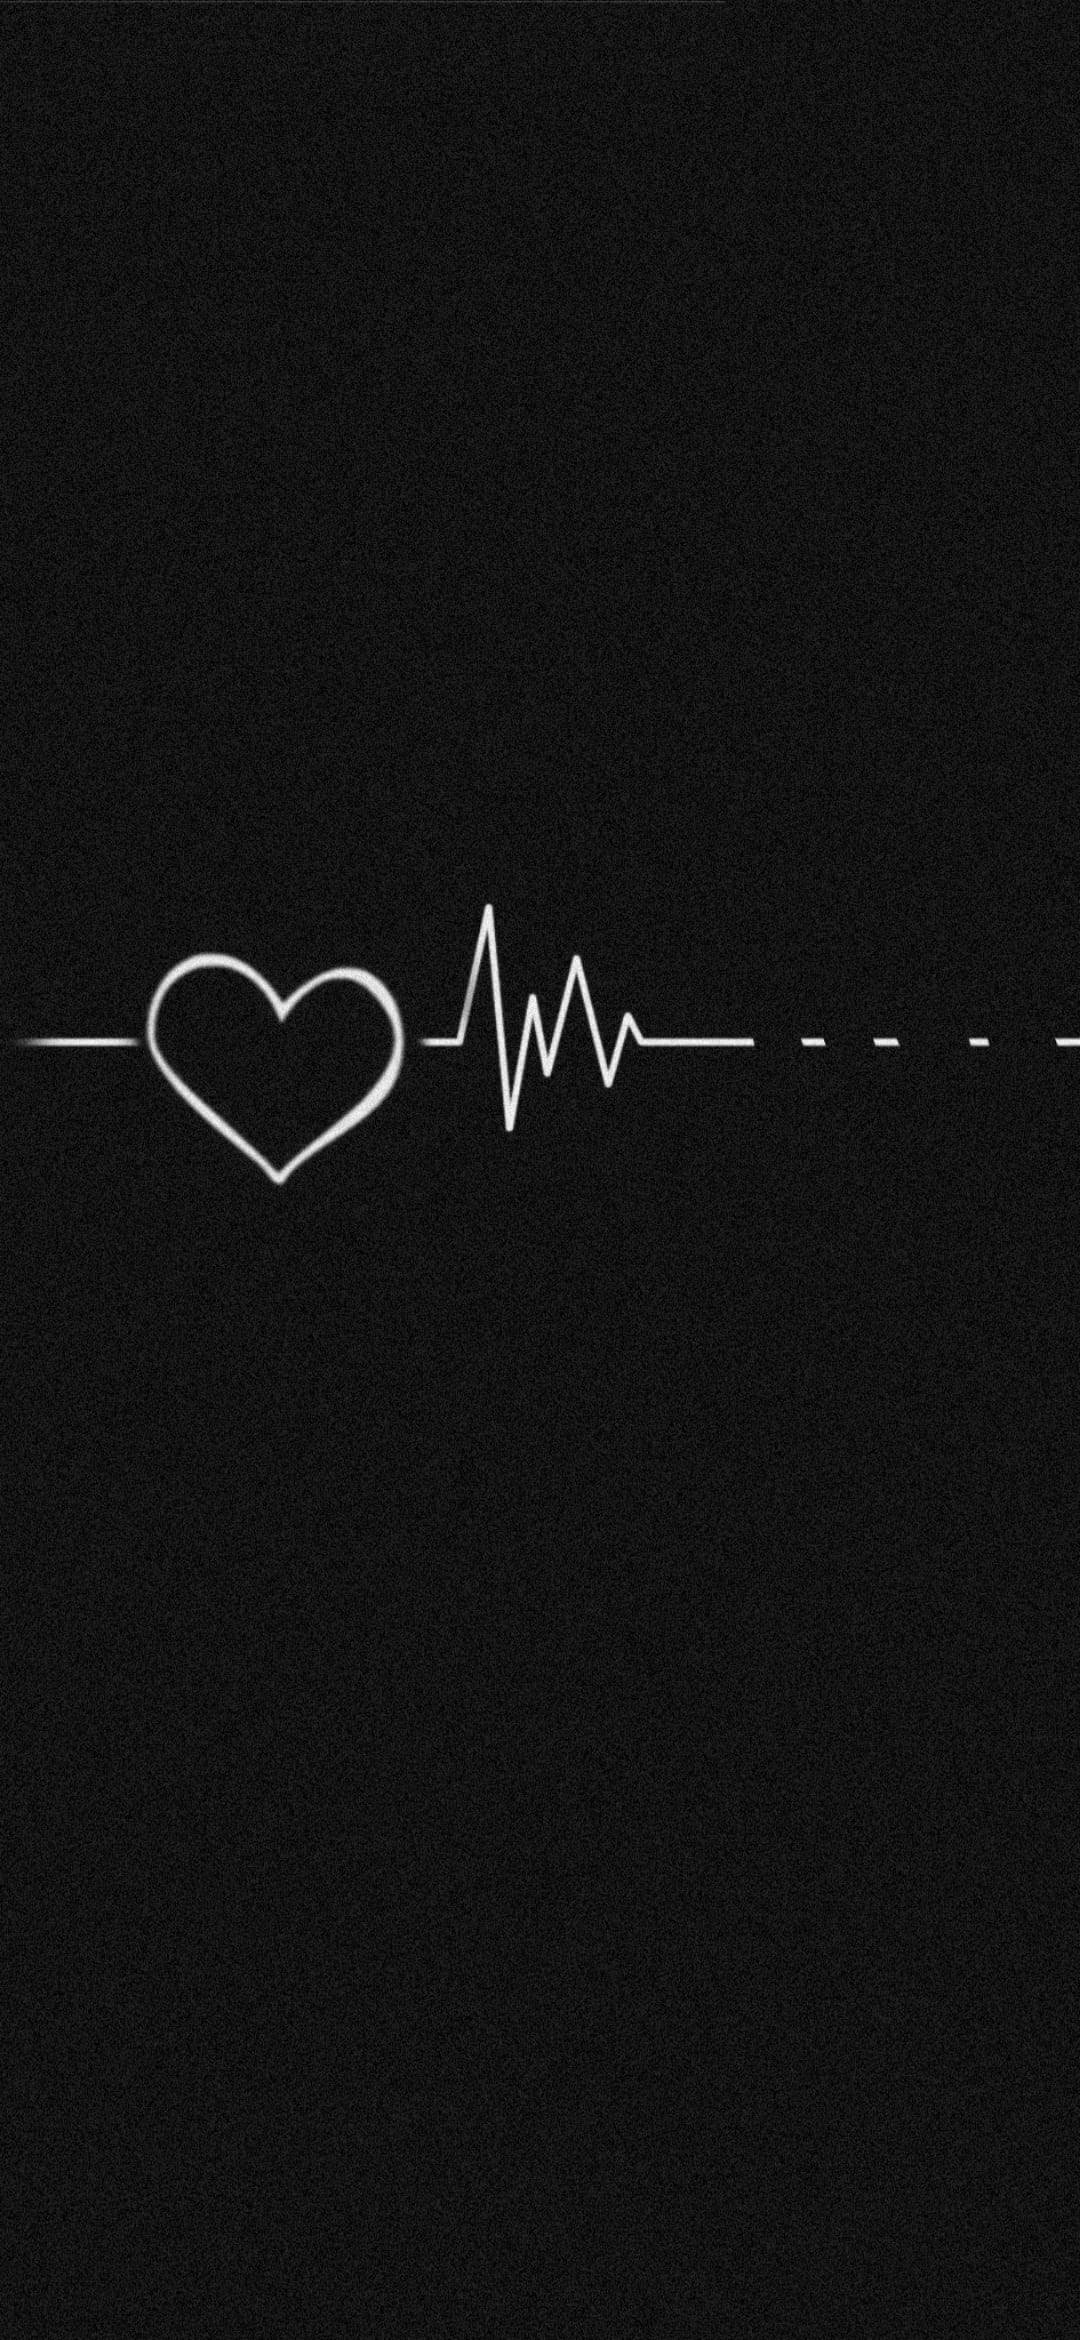 A heartbeat on black background - Heart, black heart